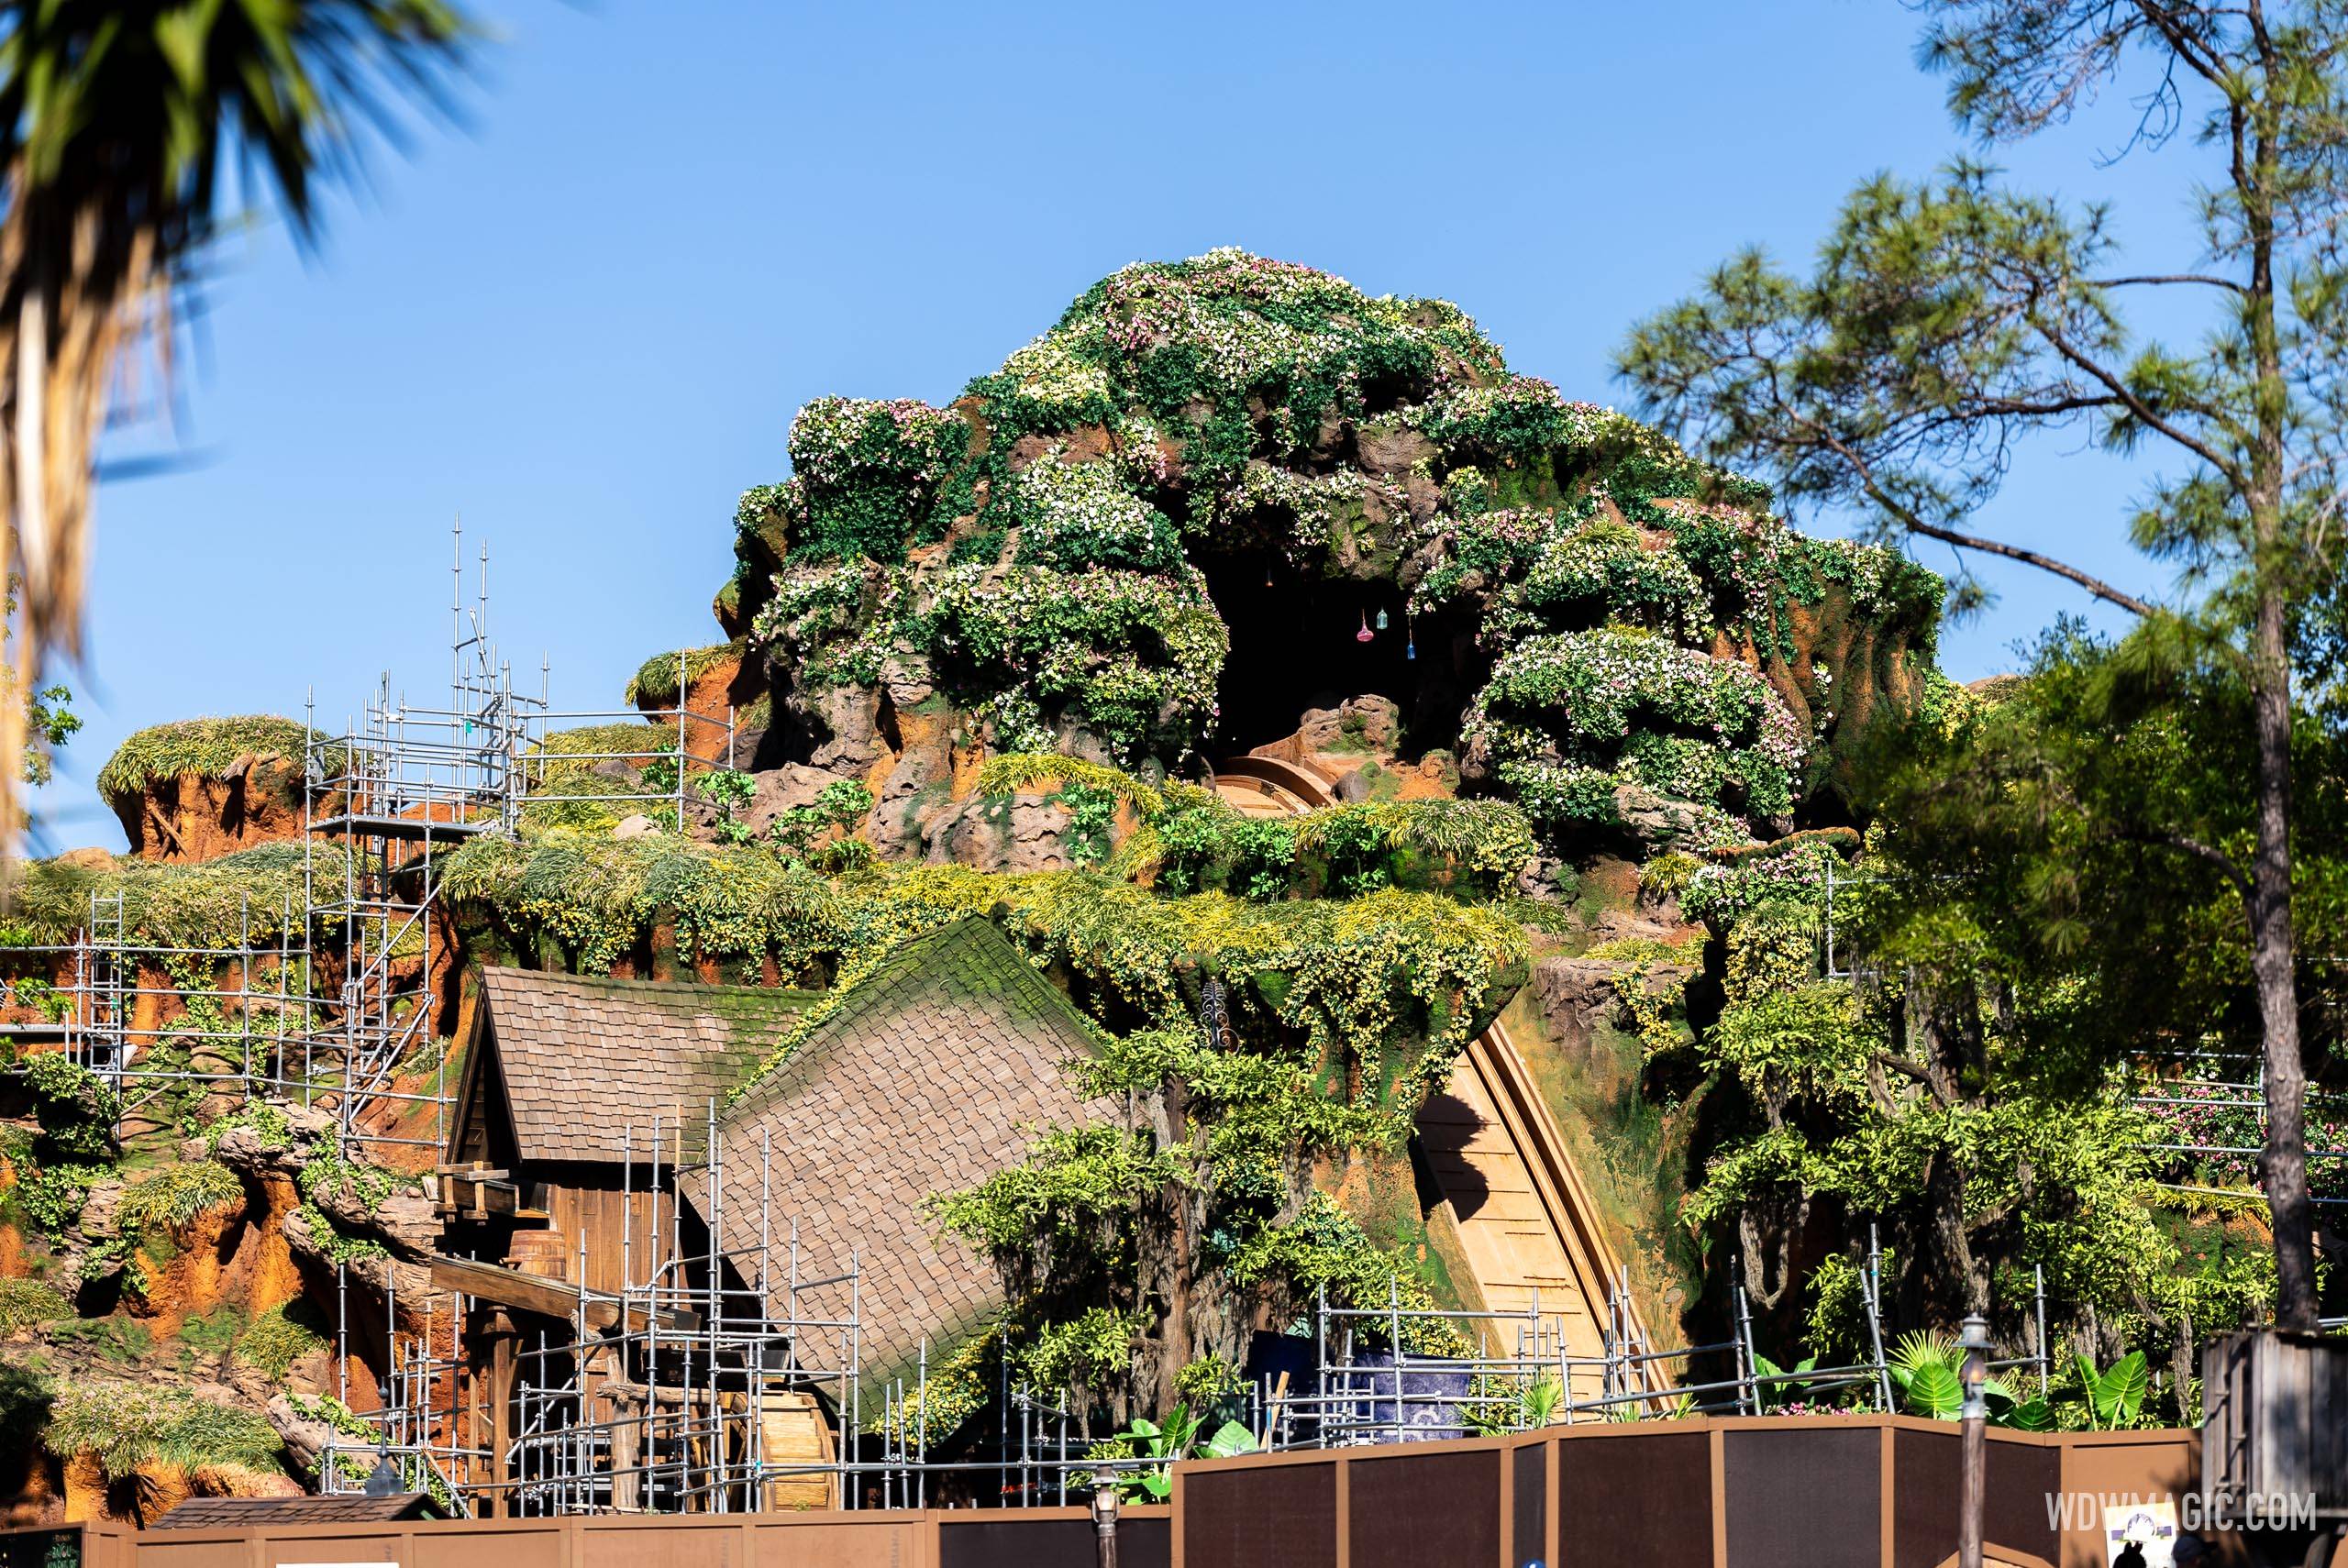 Construction update from Tiana's Bayou Adventure at Walt Disney World